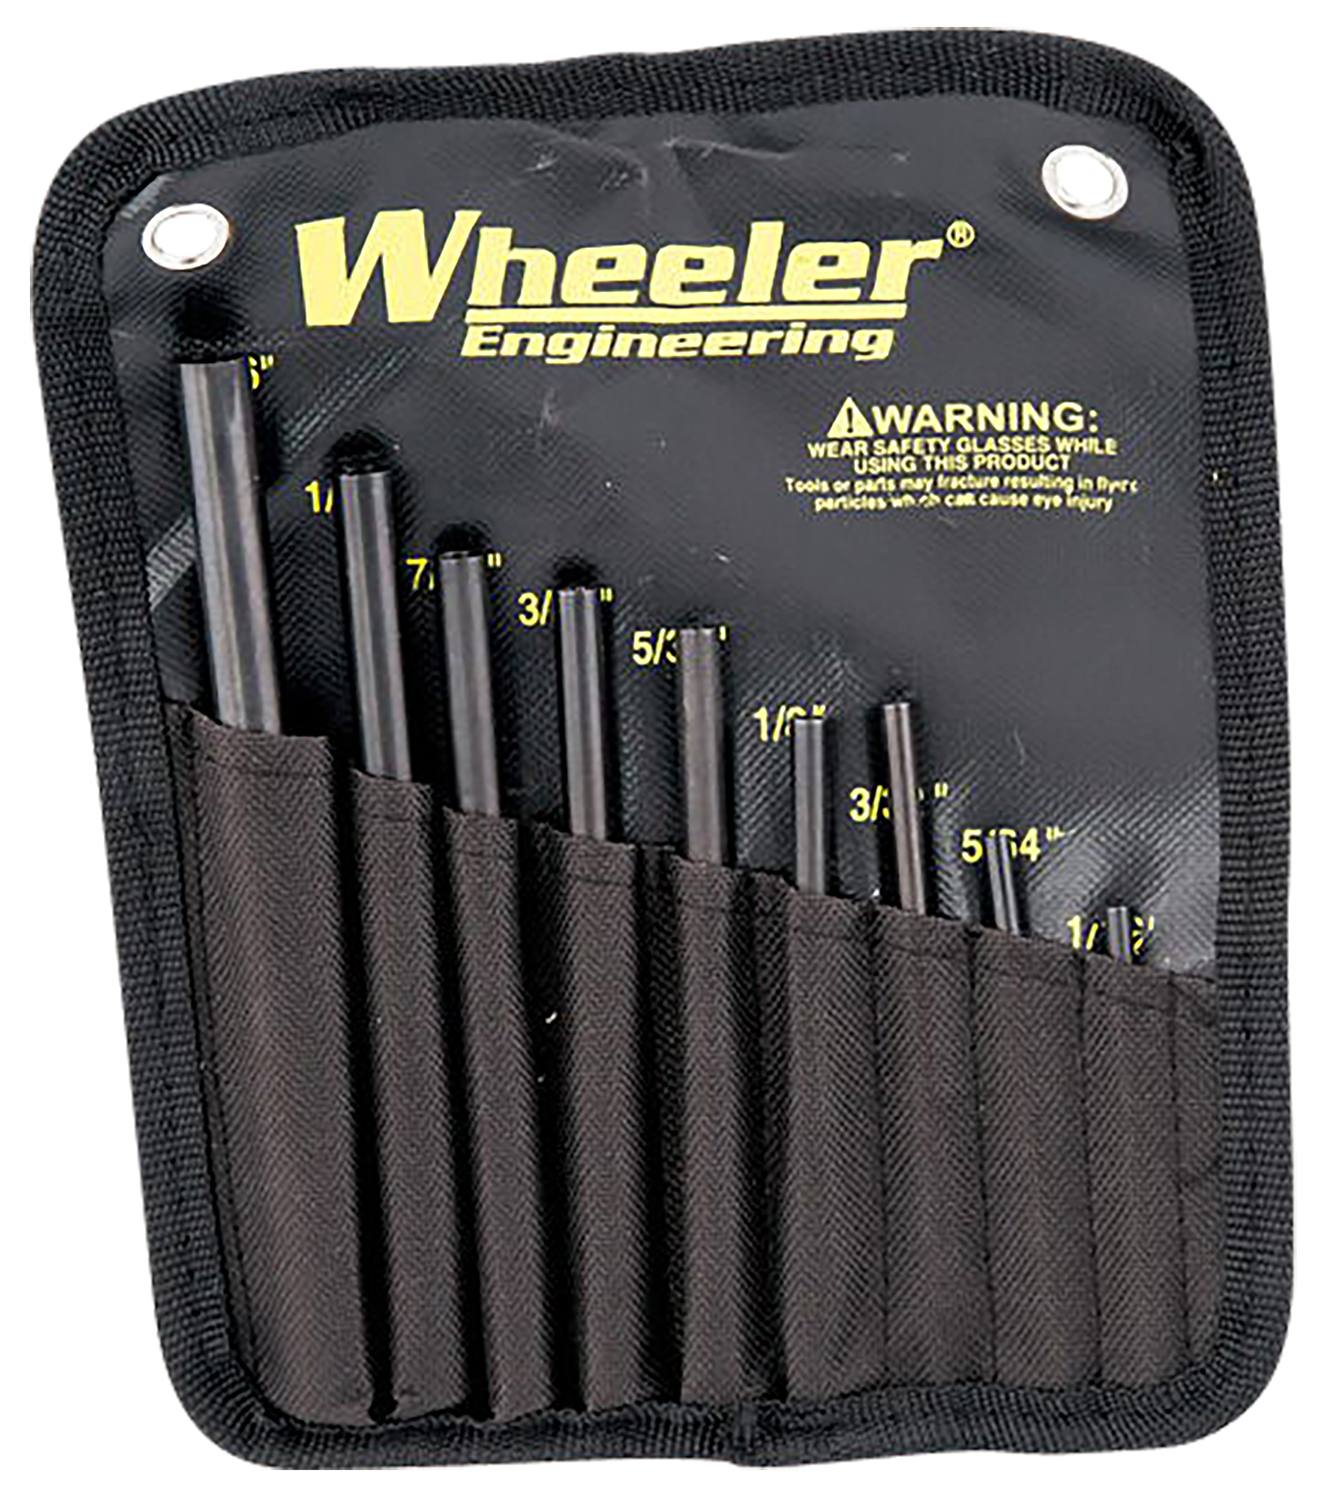 Wheeler 710910 Roll Pin Punch Set Starter Set Black/Yellow Steel Knurled Handle 9 Pieces